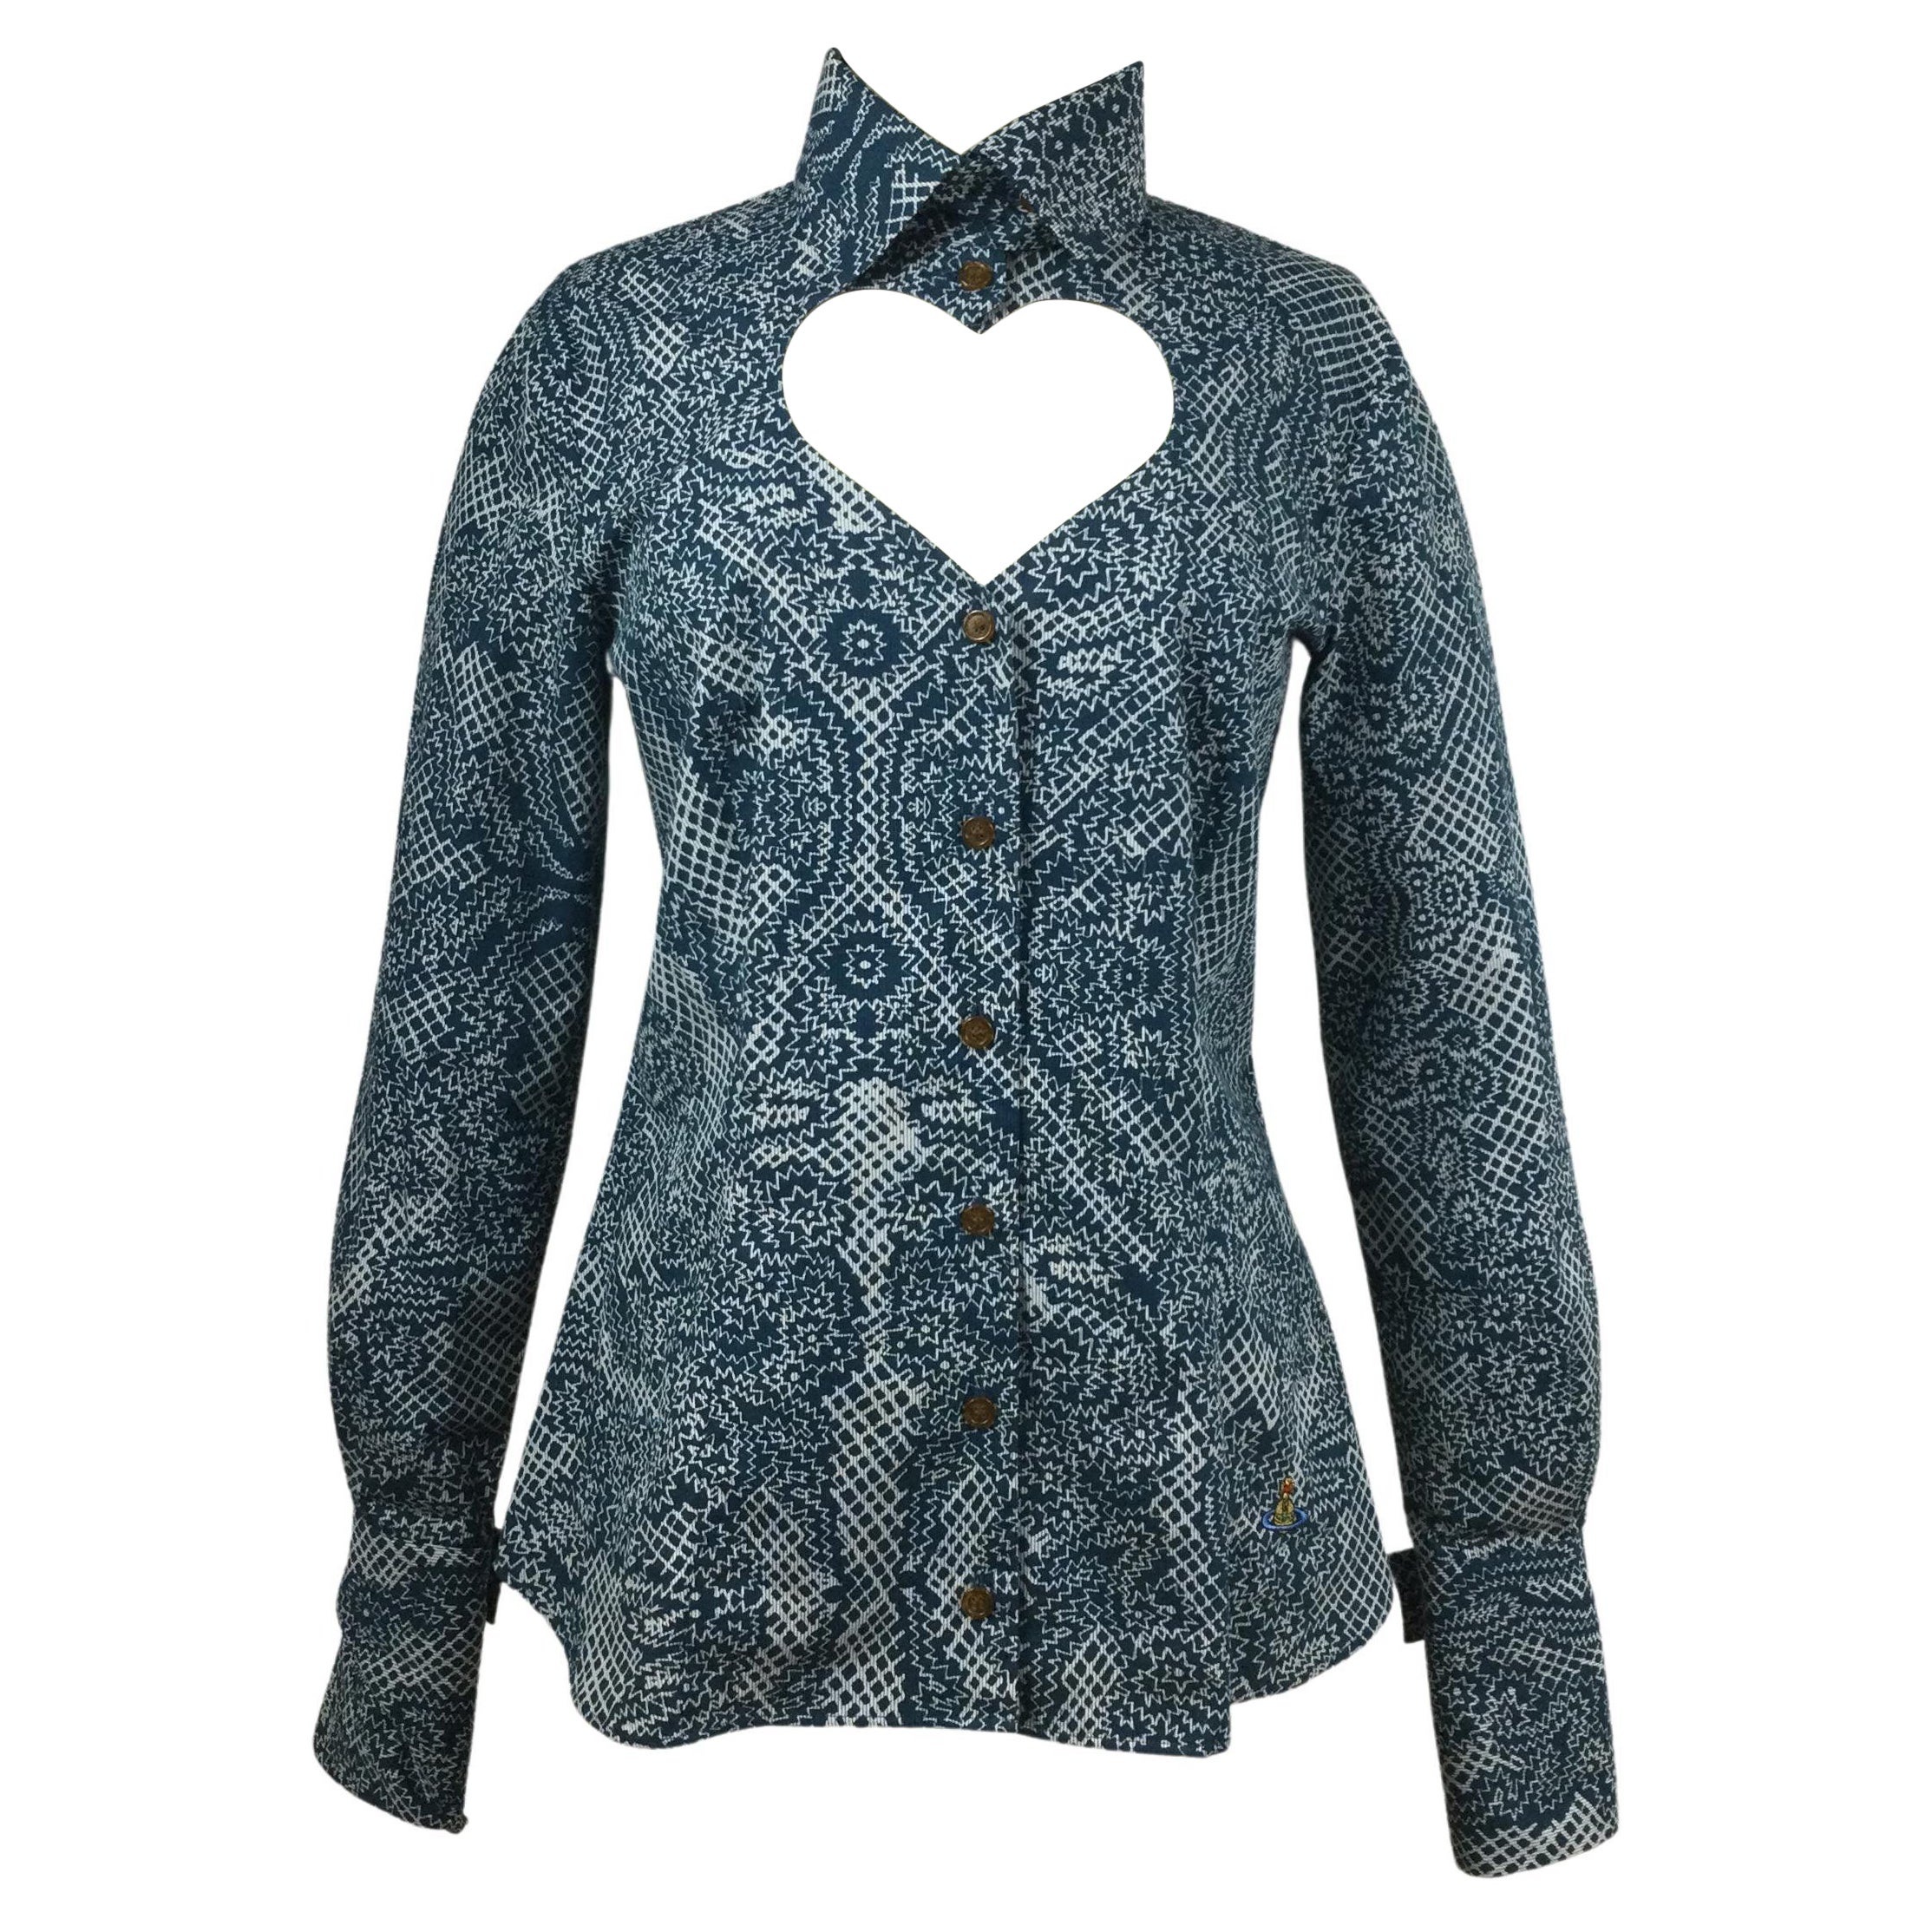 Vivienne Westwood, Red Label heart shirt